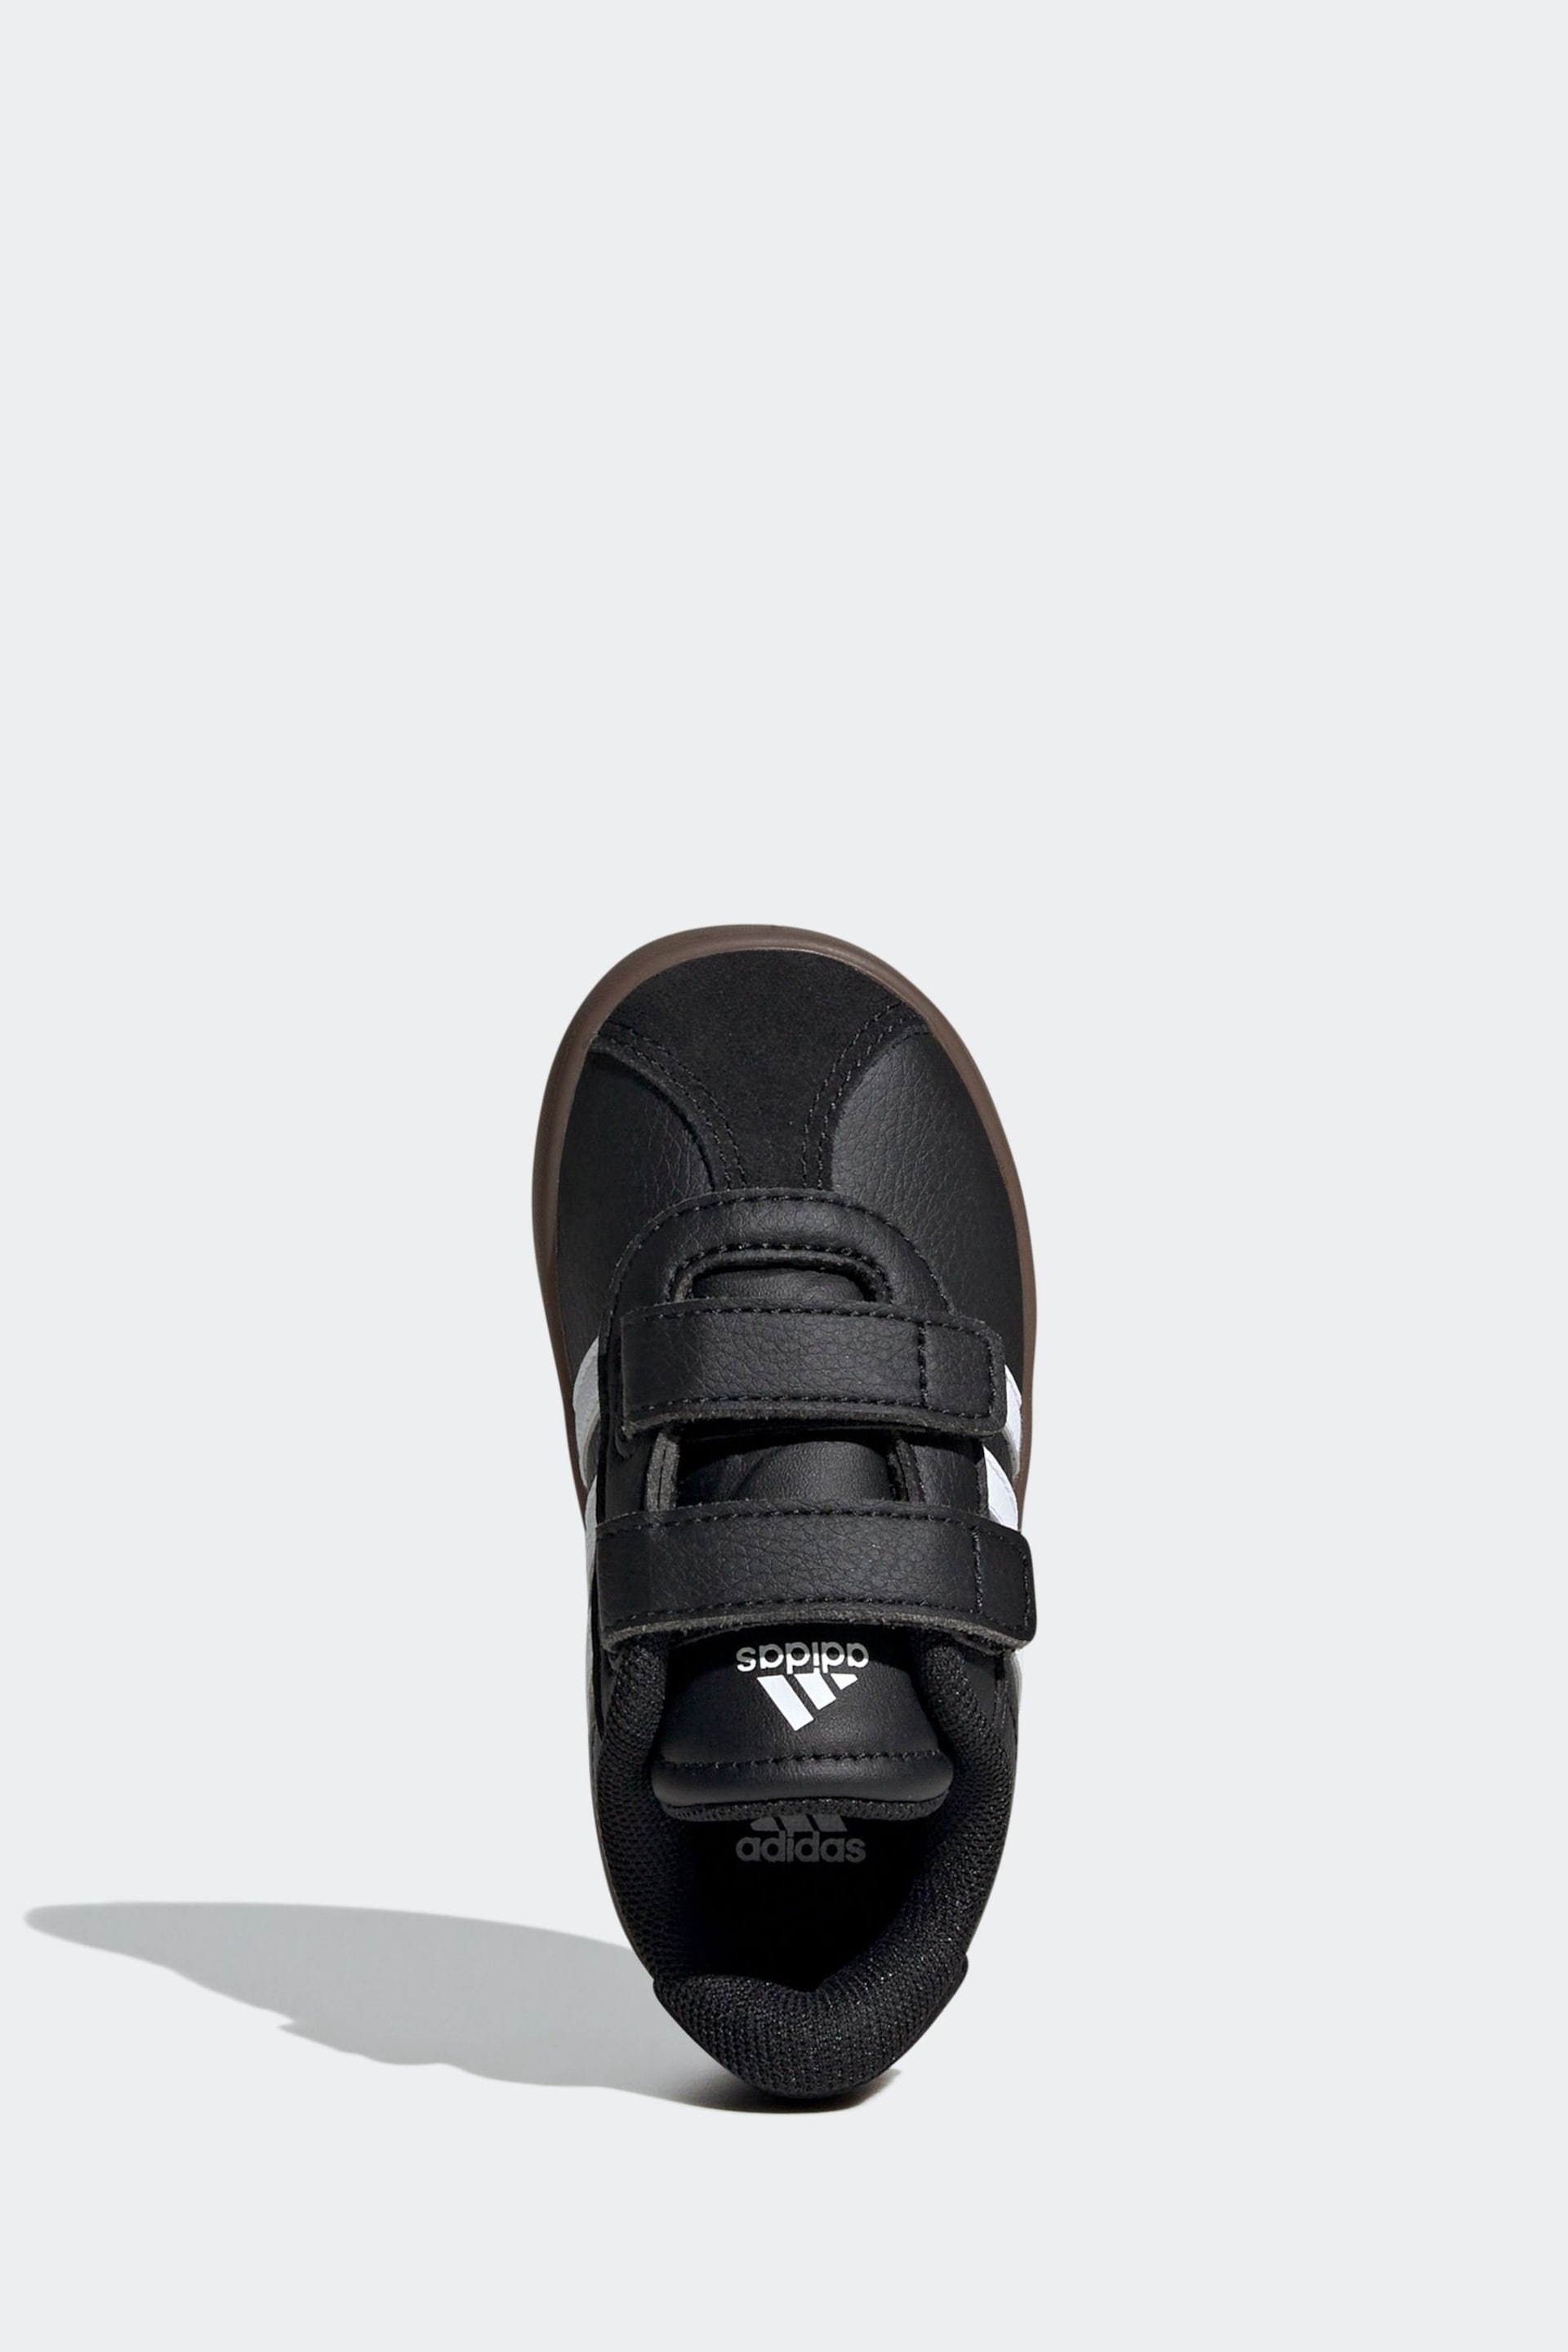 adidas Black/White VL Court 3.0 Skateboarding Shoes Kids - Image 7 of 10